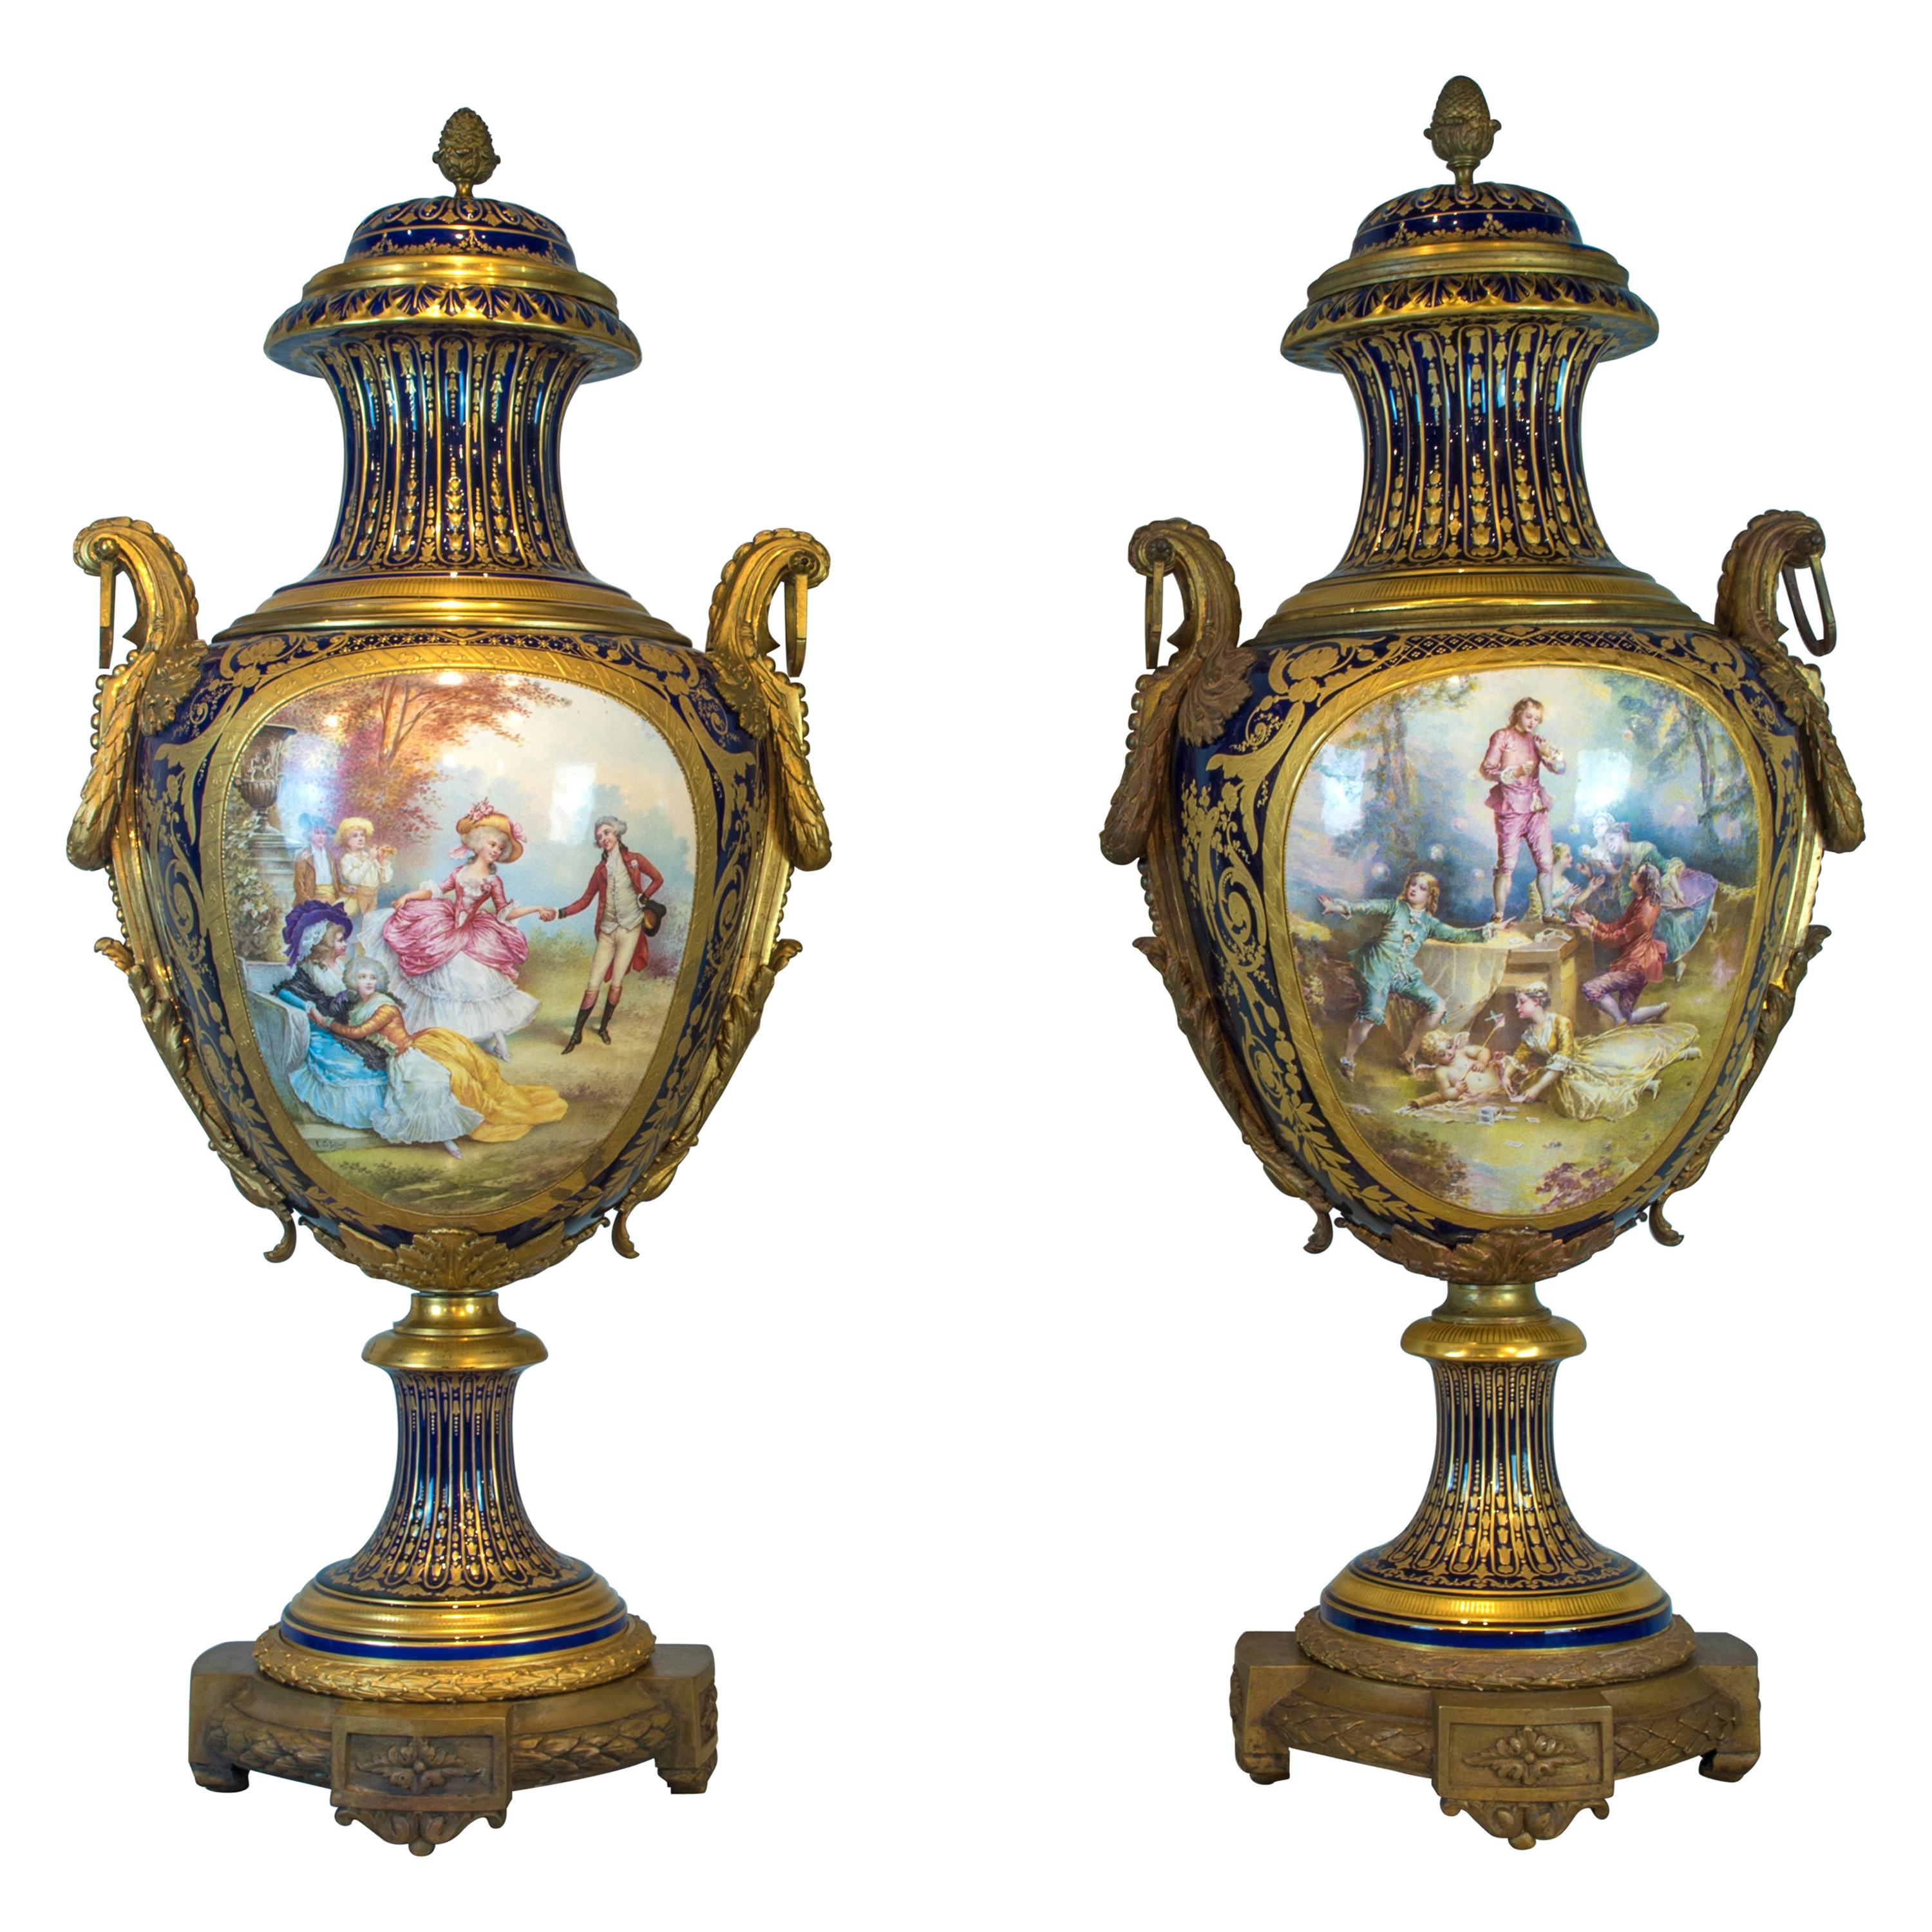 Monumental Pair of Magnificent Ormolu Mounted Sèvres Porcelain Vases